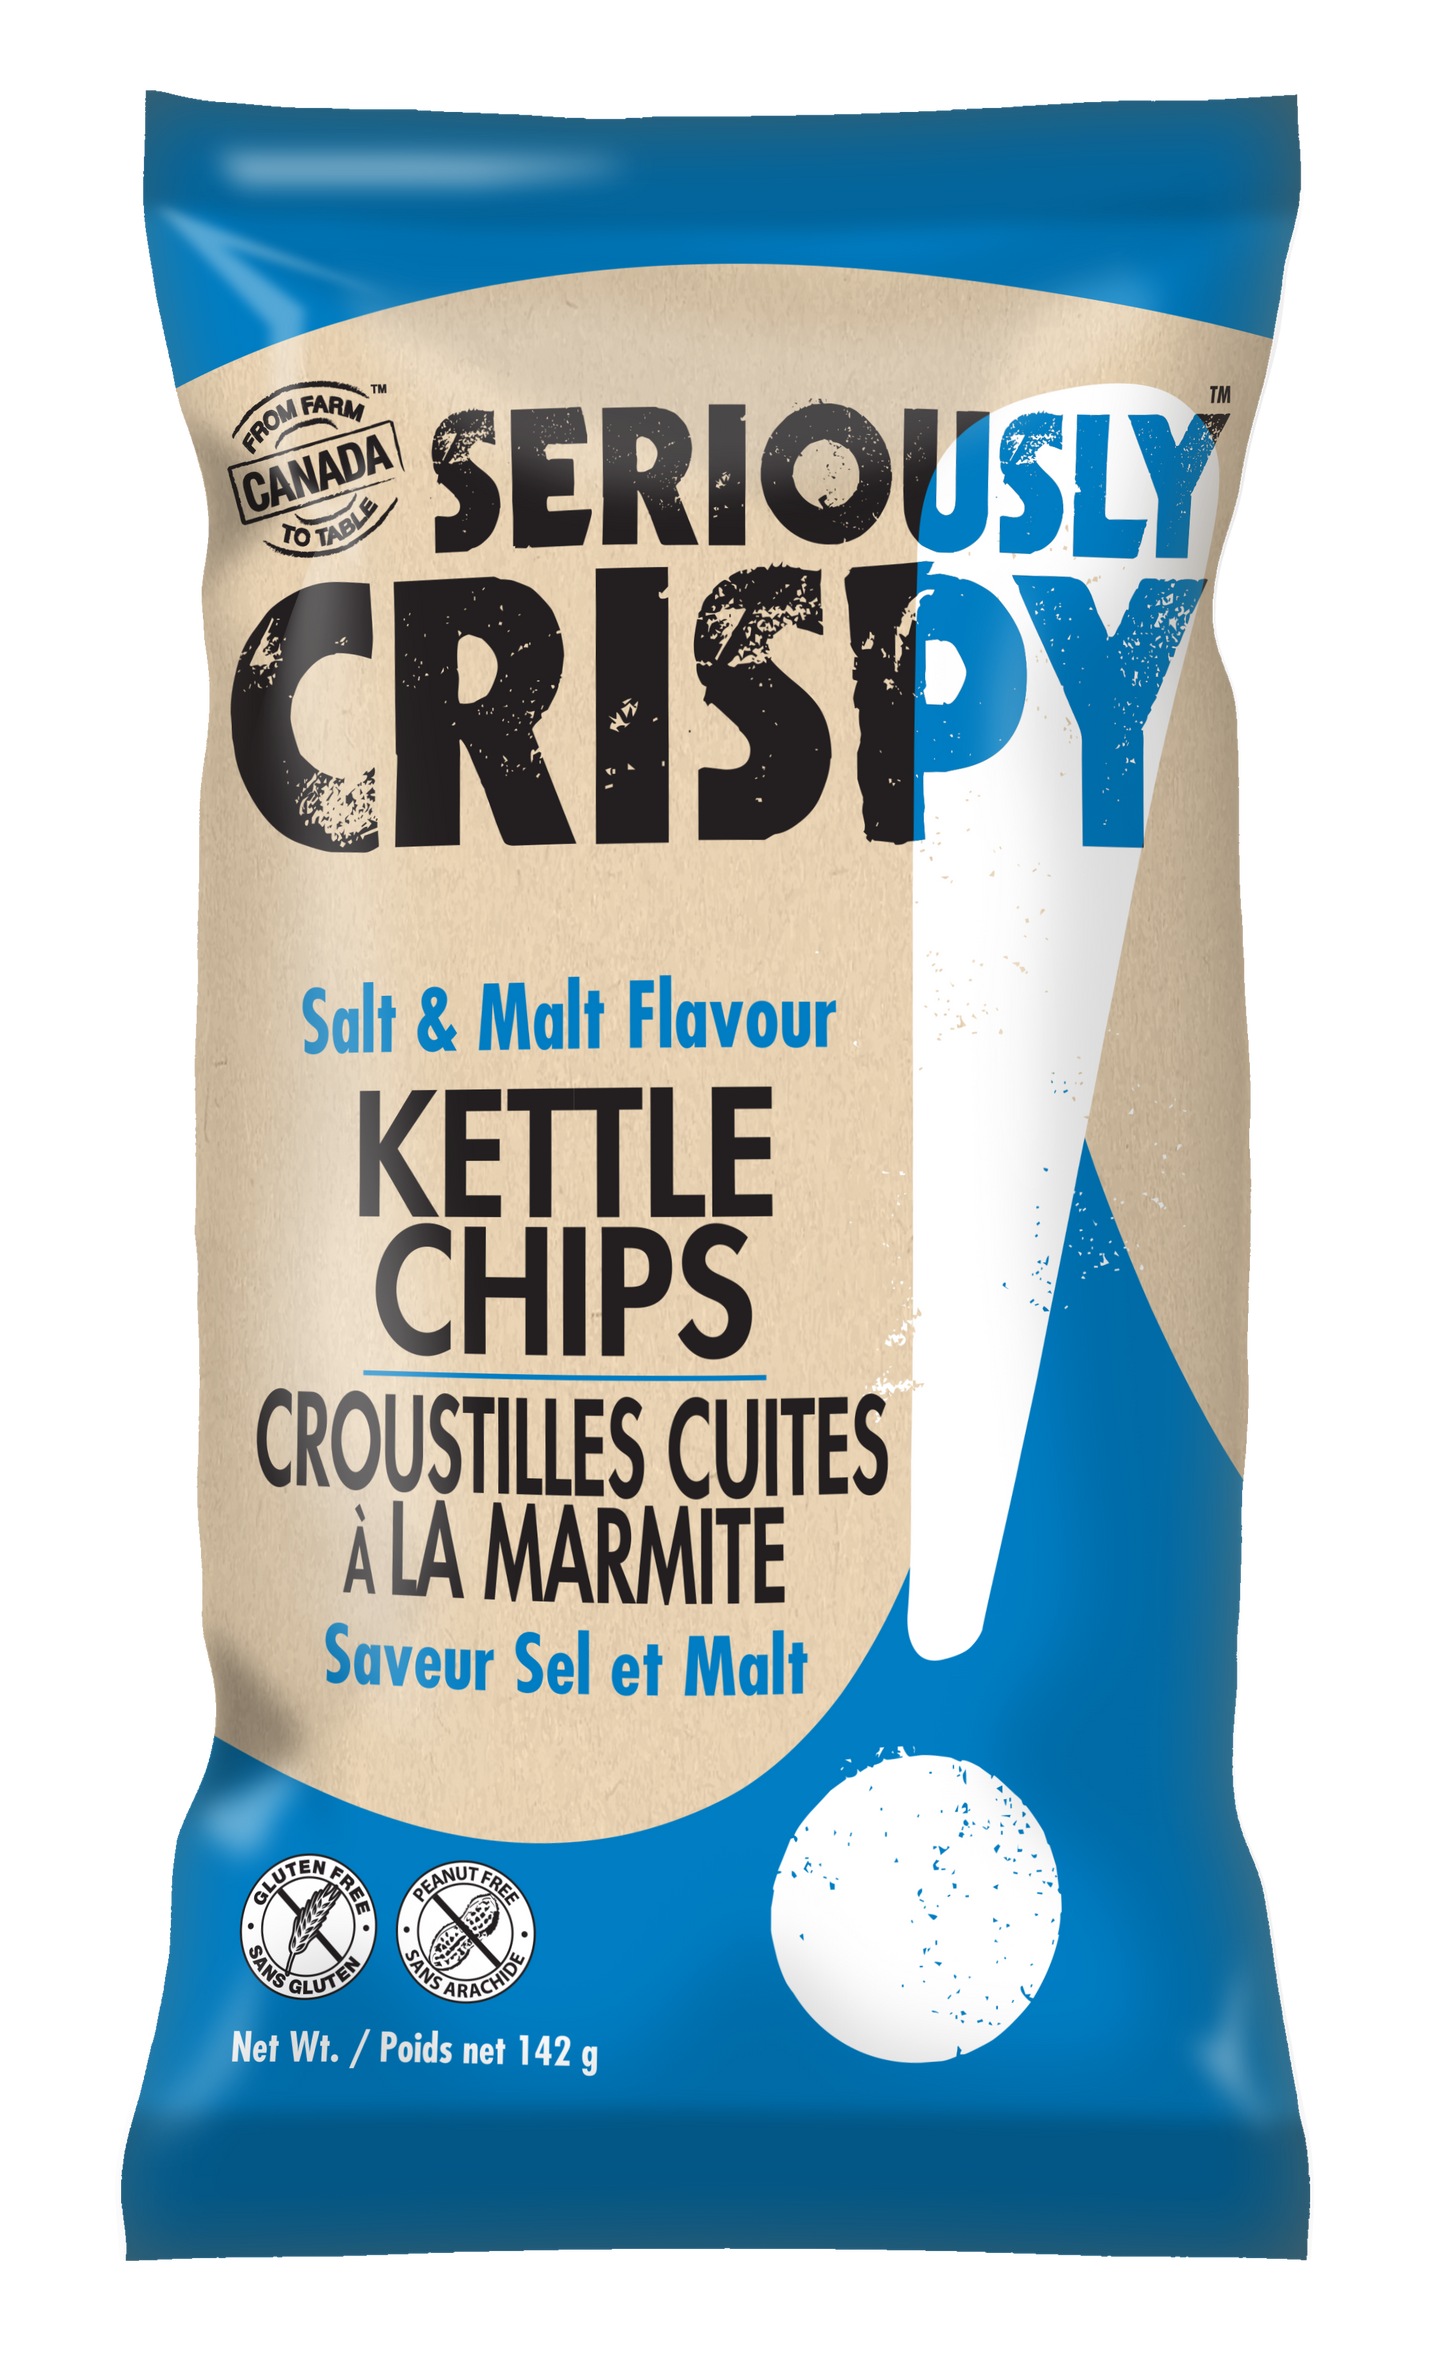 Seriously Crispy Salt & Malt Kettle Chips